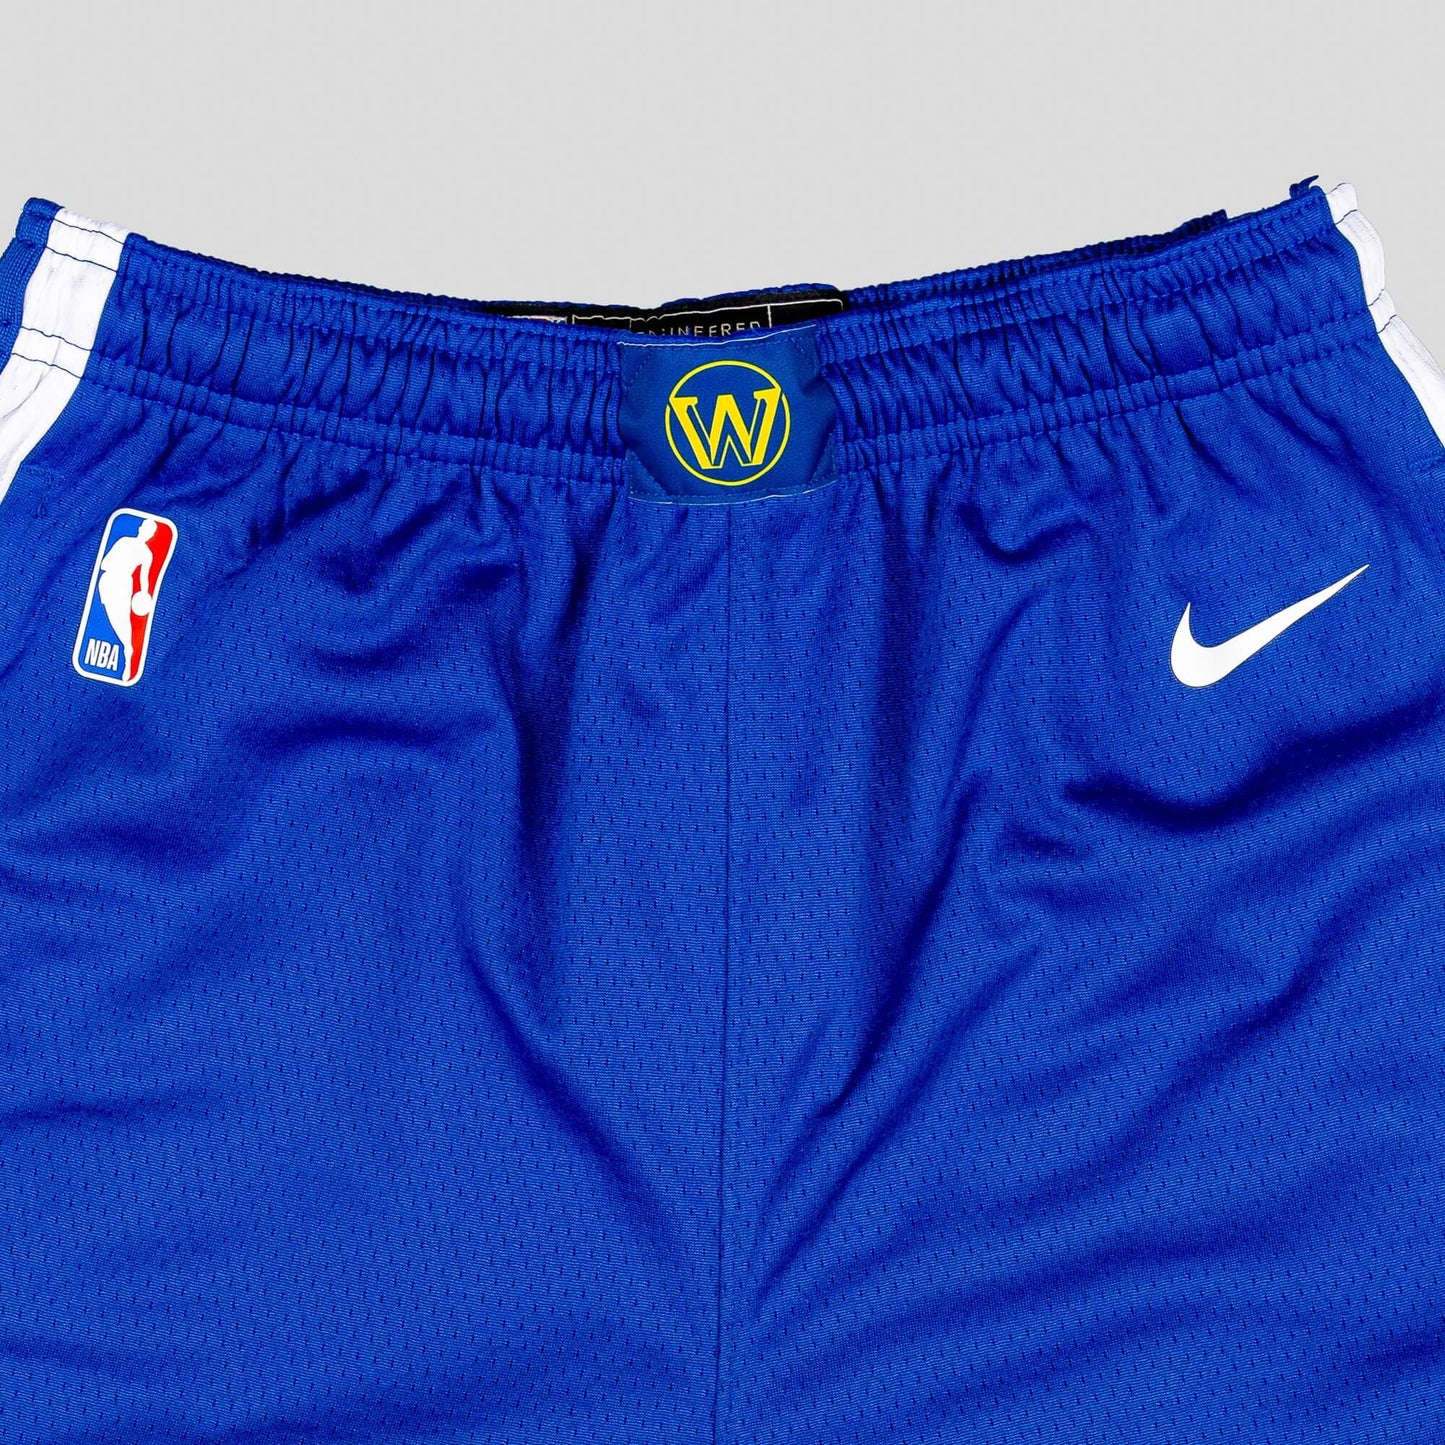 Nike Boys Icon Swingman Short Golden State Warriors Blue/Yellow